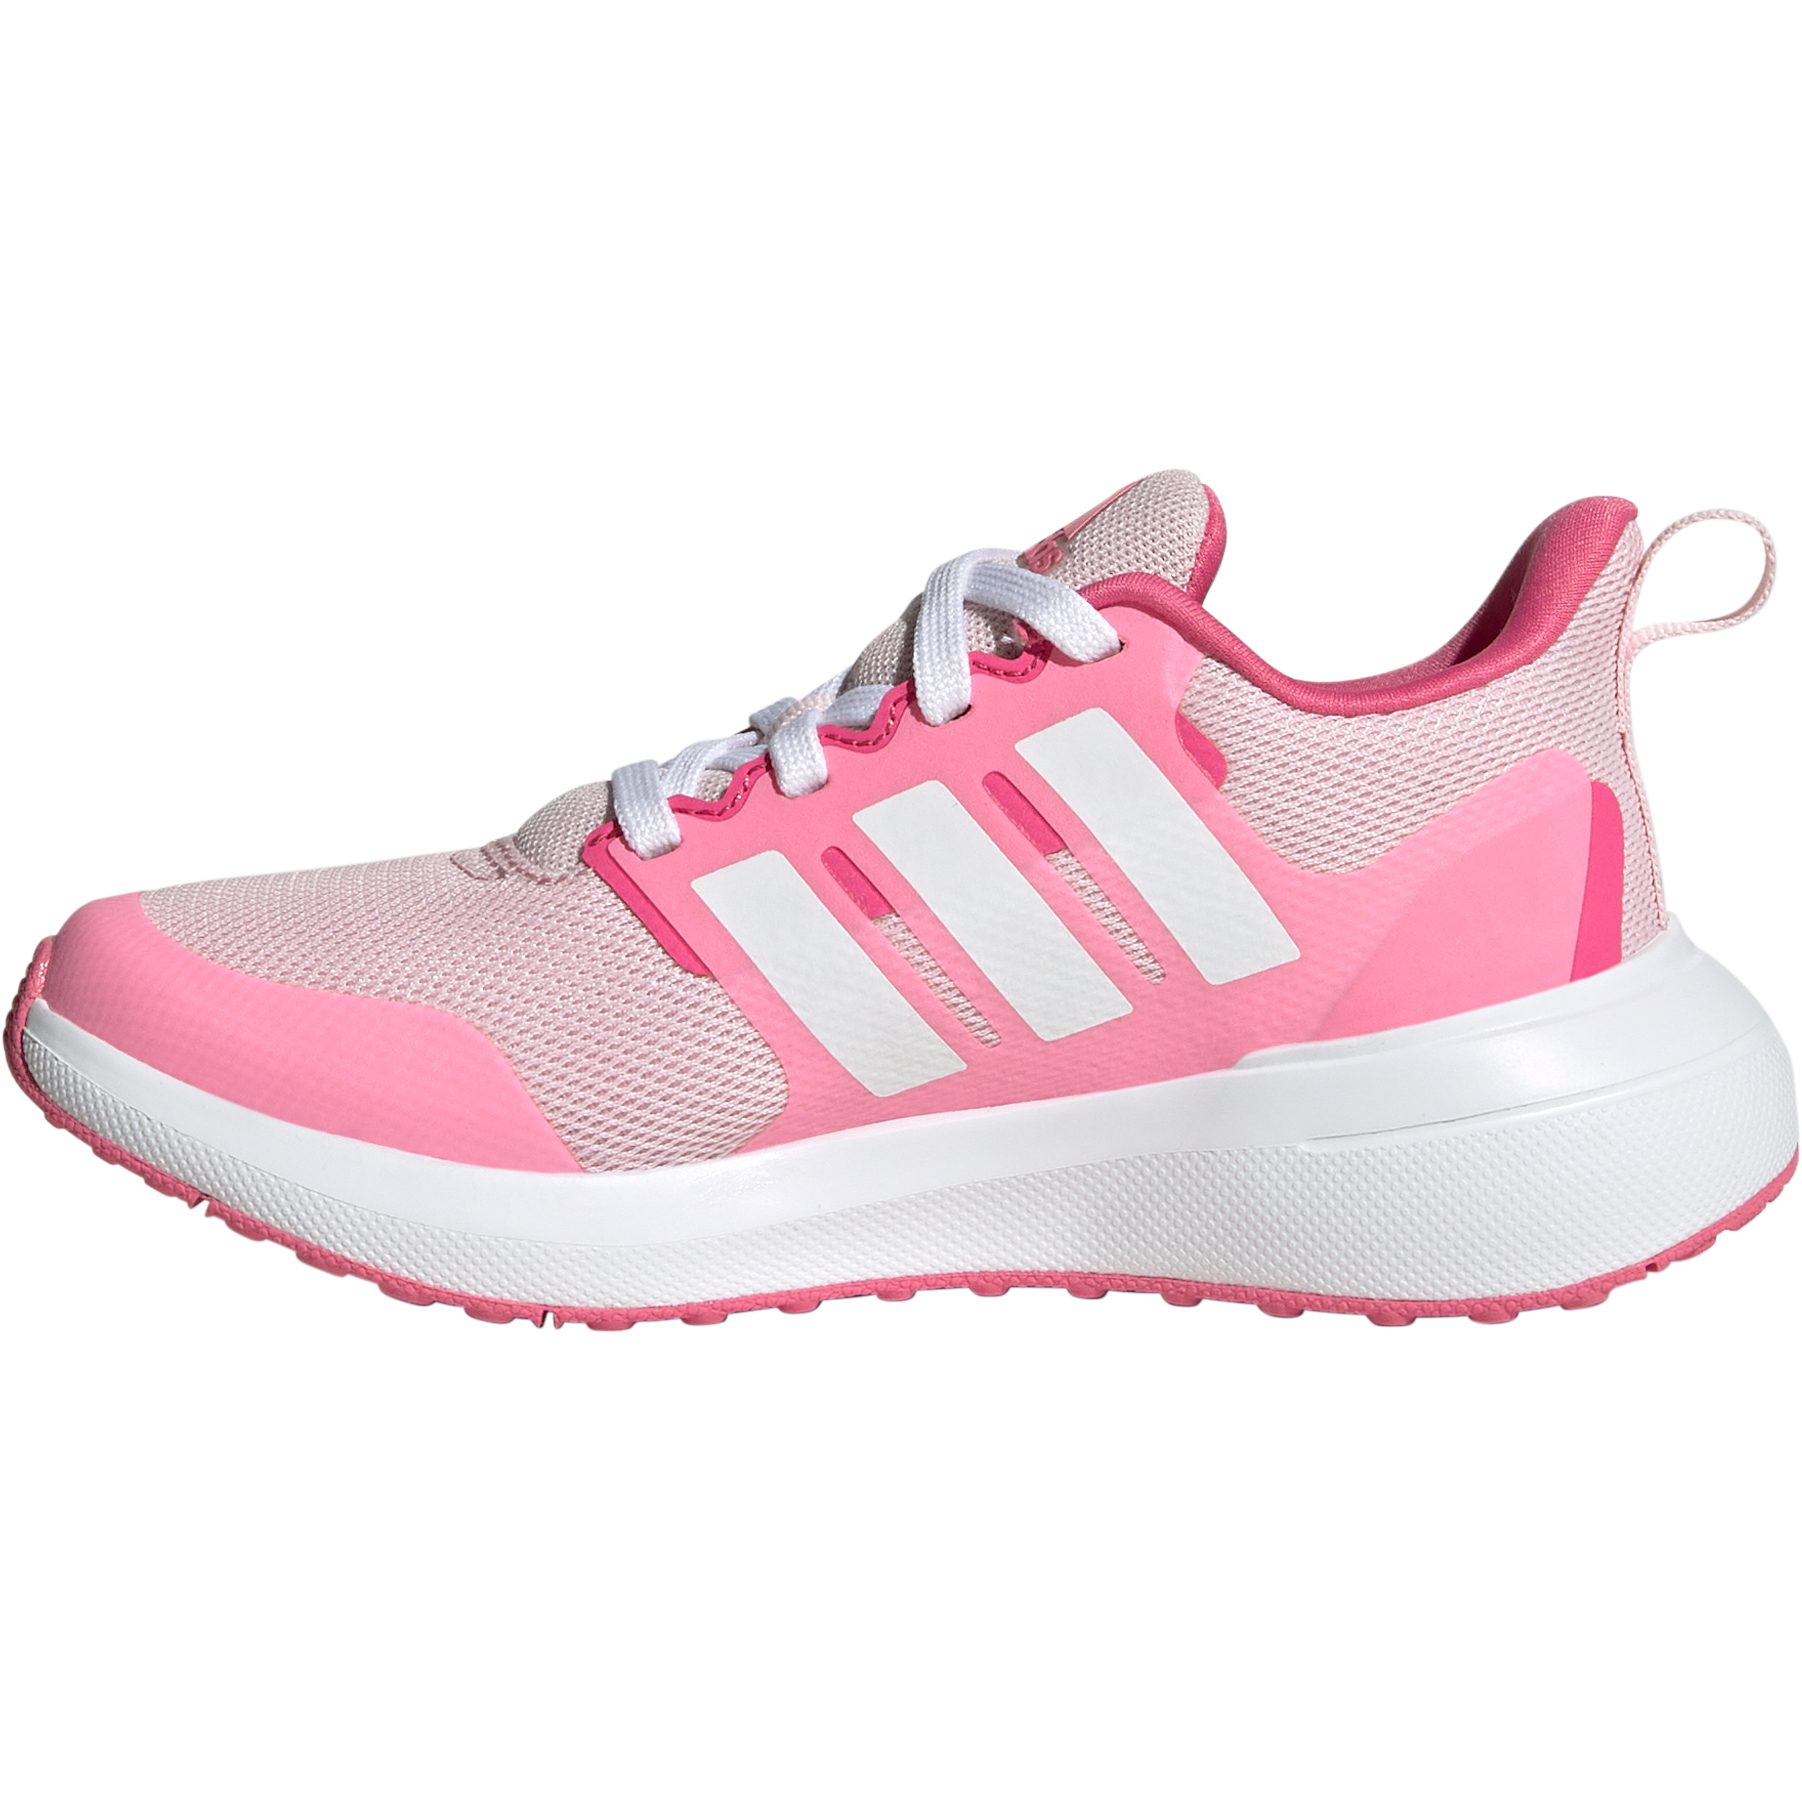 Kids clear Sport Sneaker - Shop Cloudfoam at 2.0 Bittl adidas FortaRun pink